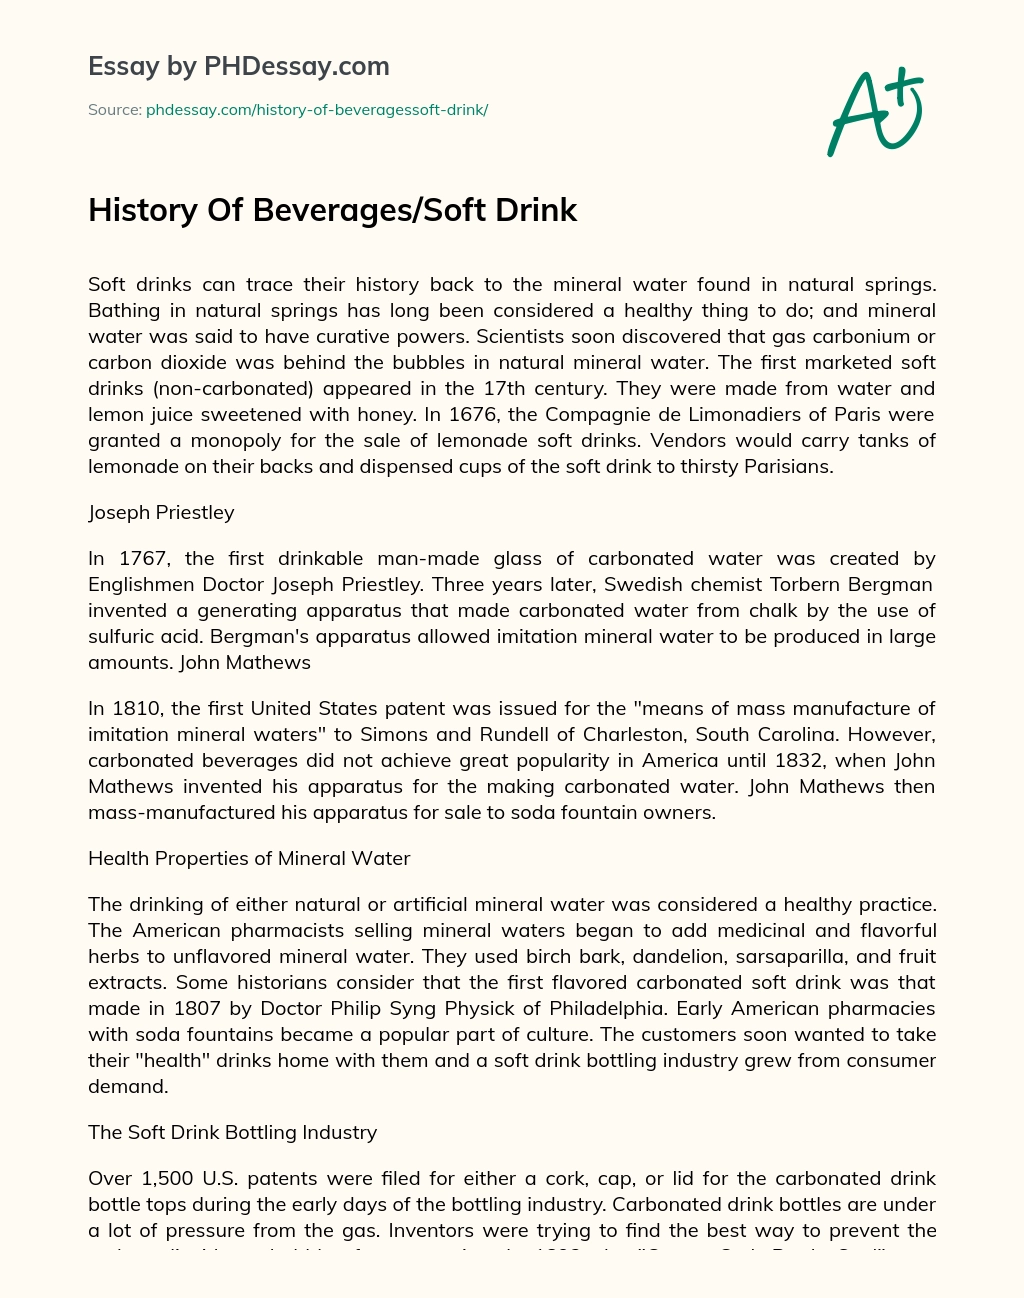 History Of Beverages/Soft Drink essay